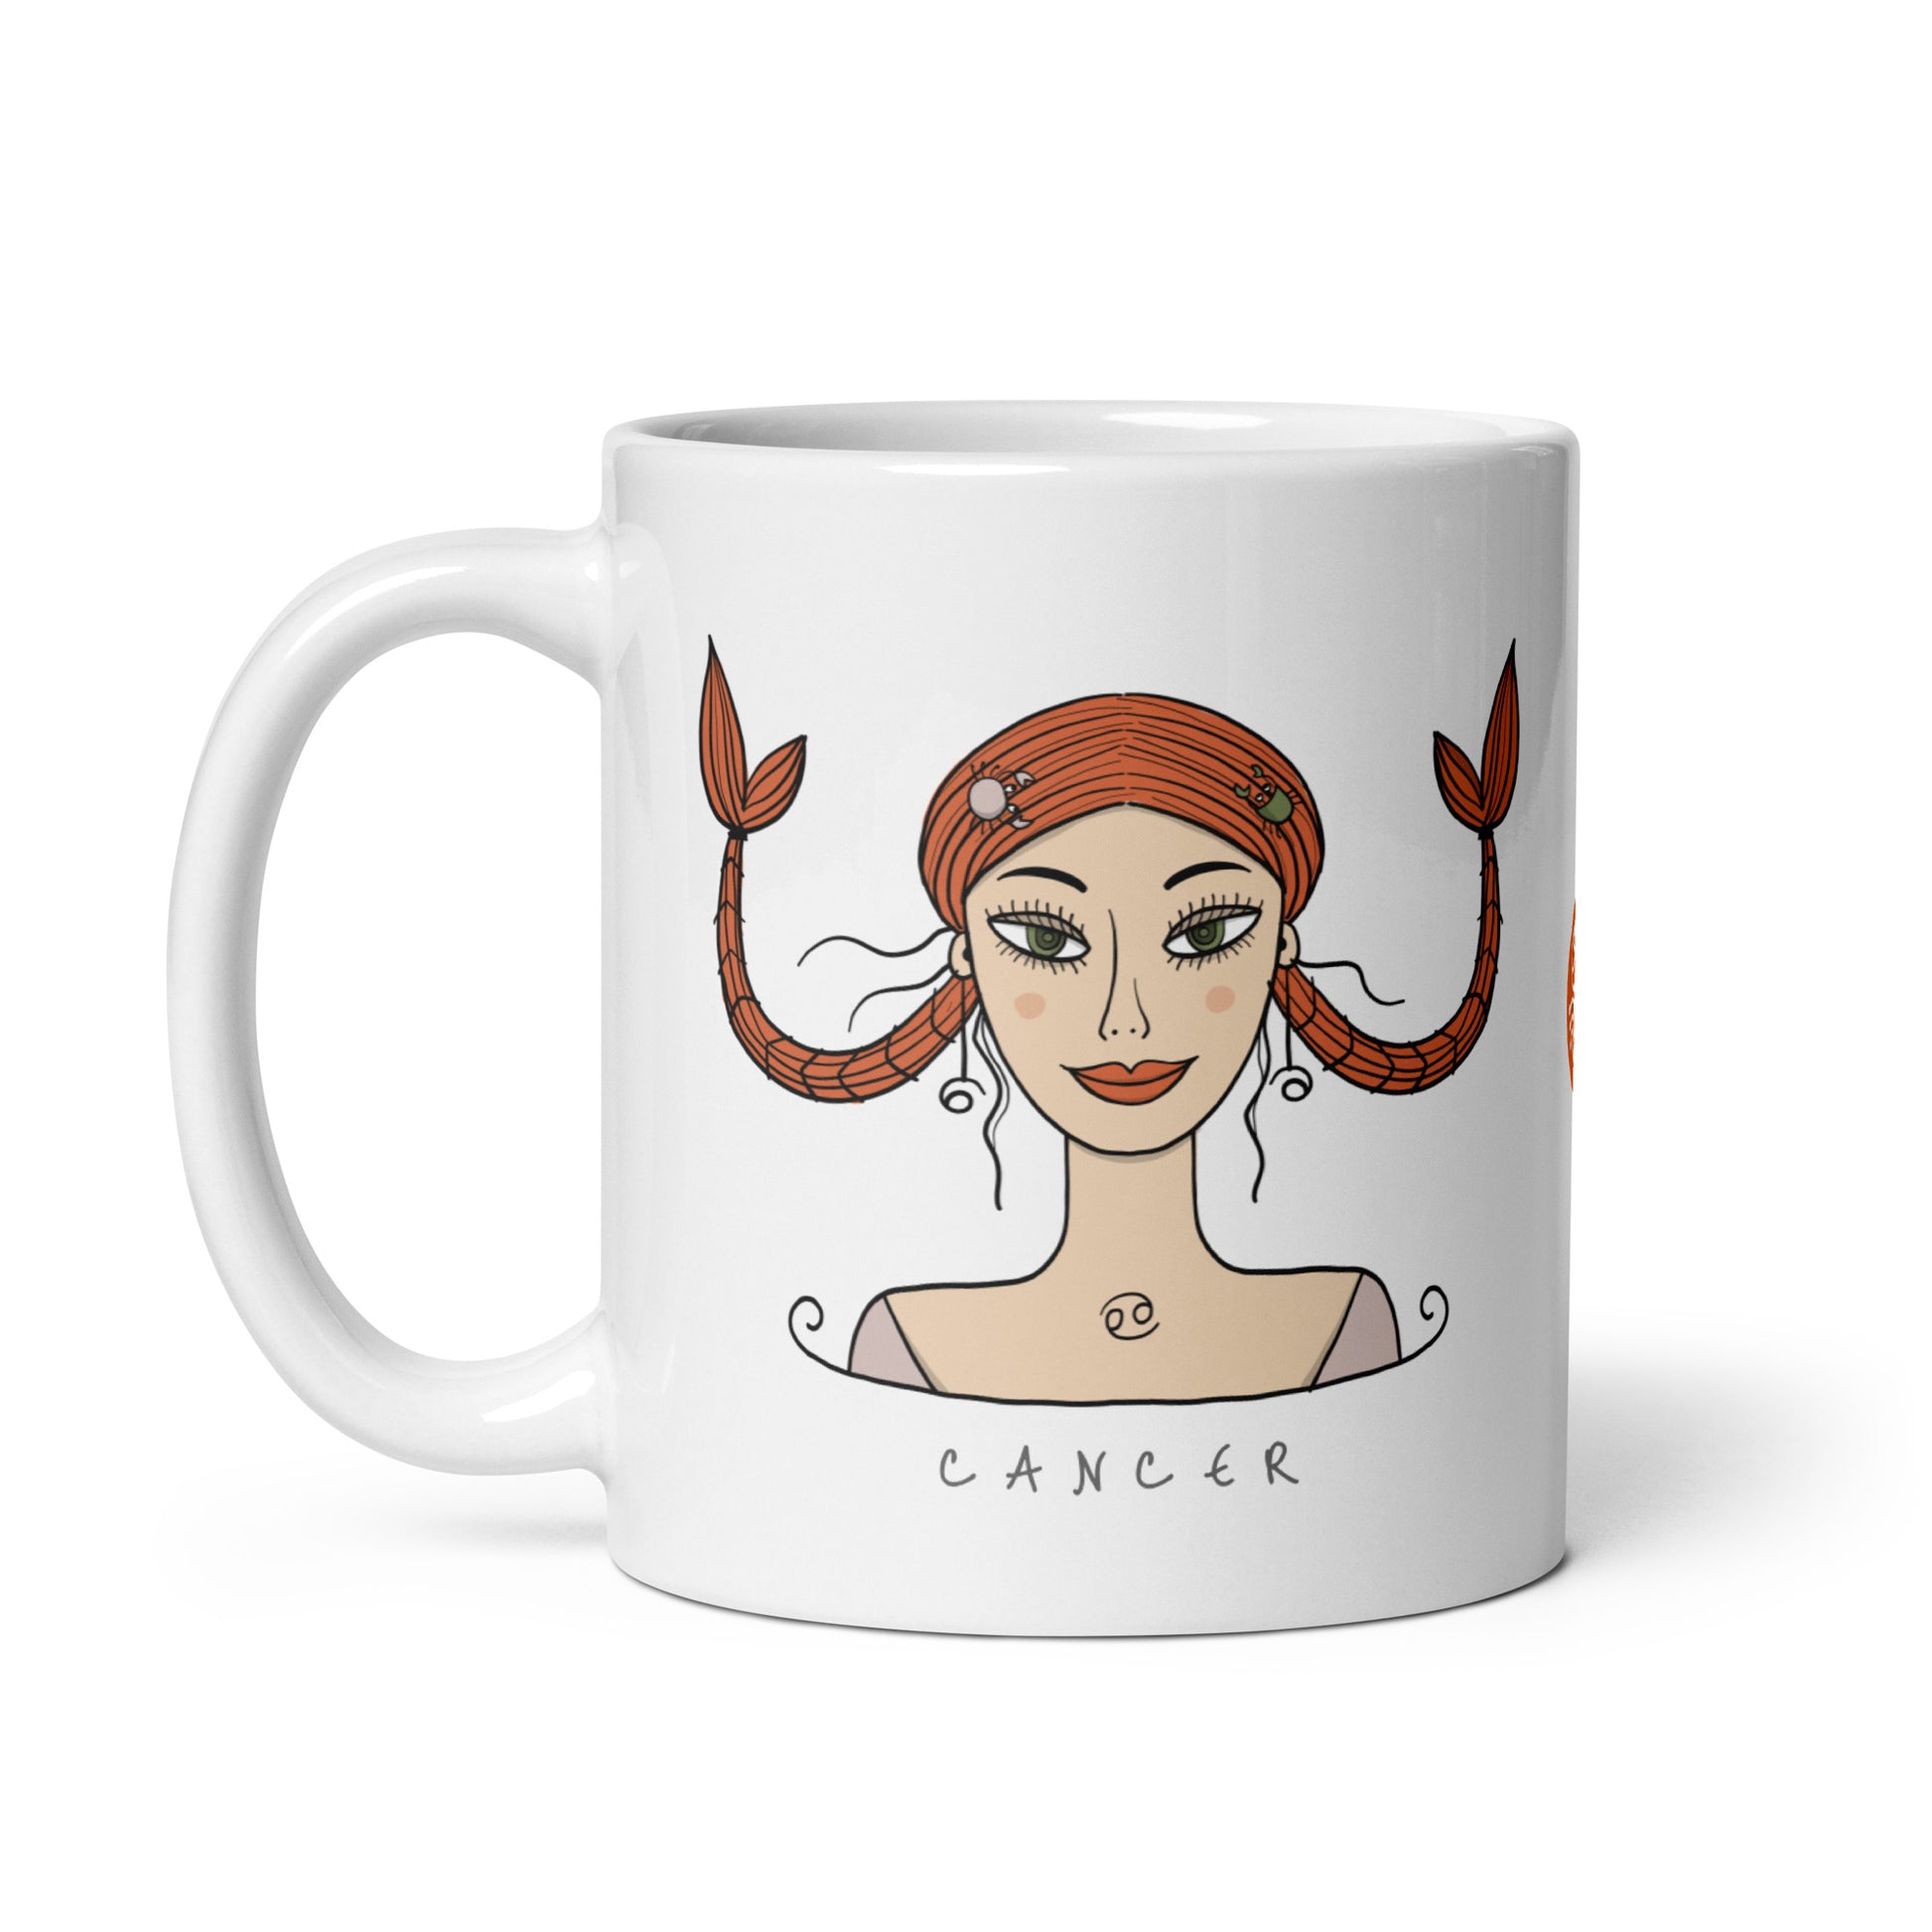 Personalised astrology Mug 11oz with pretty girl portrait - Cancer zodiac sign